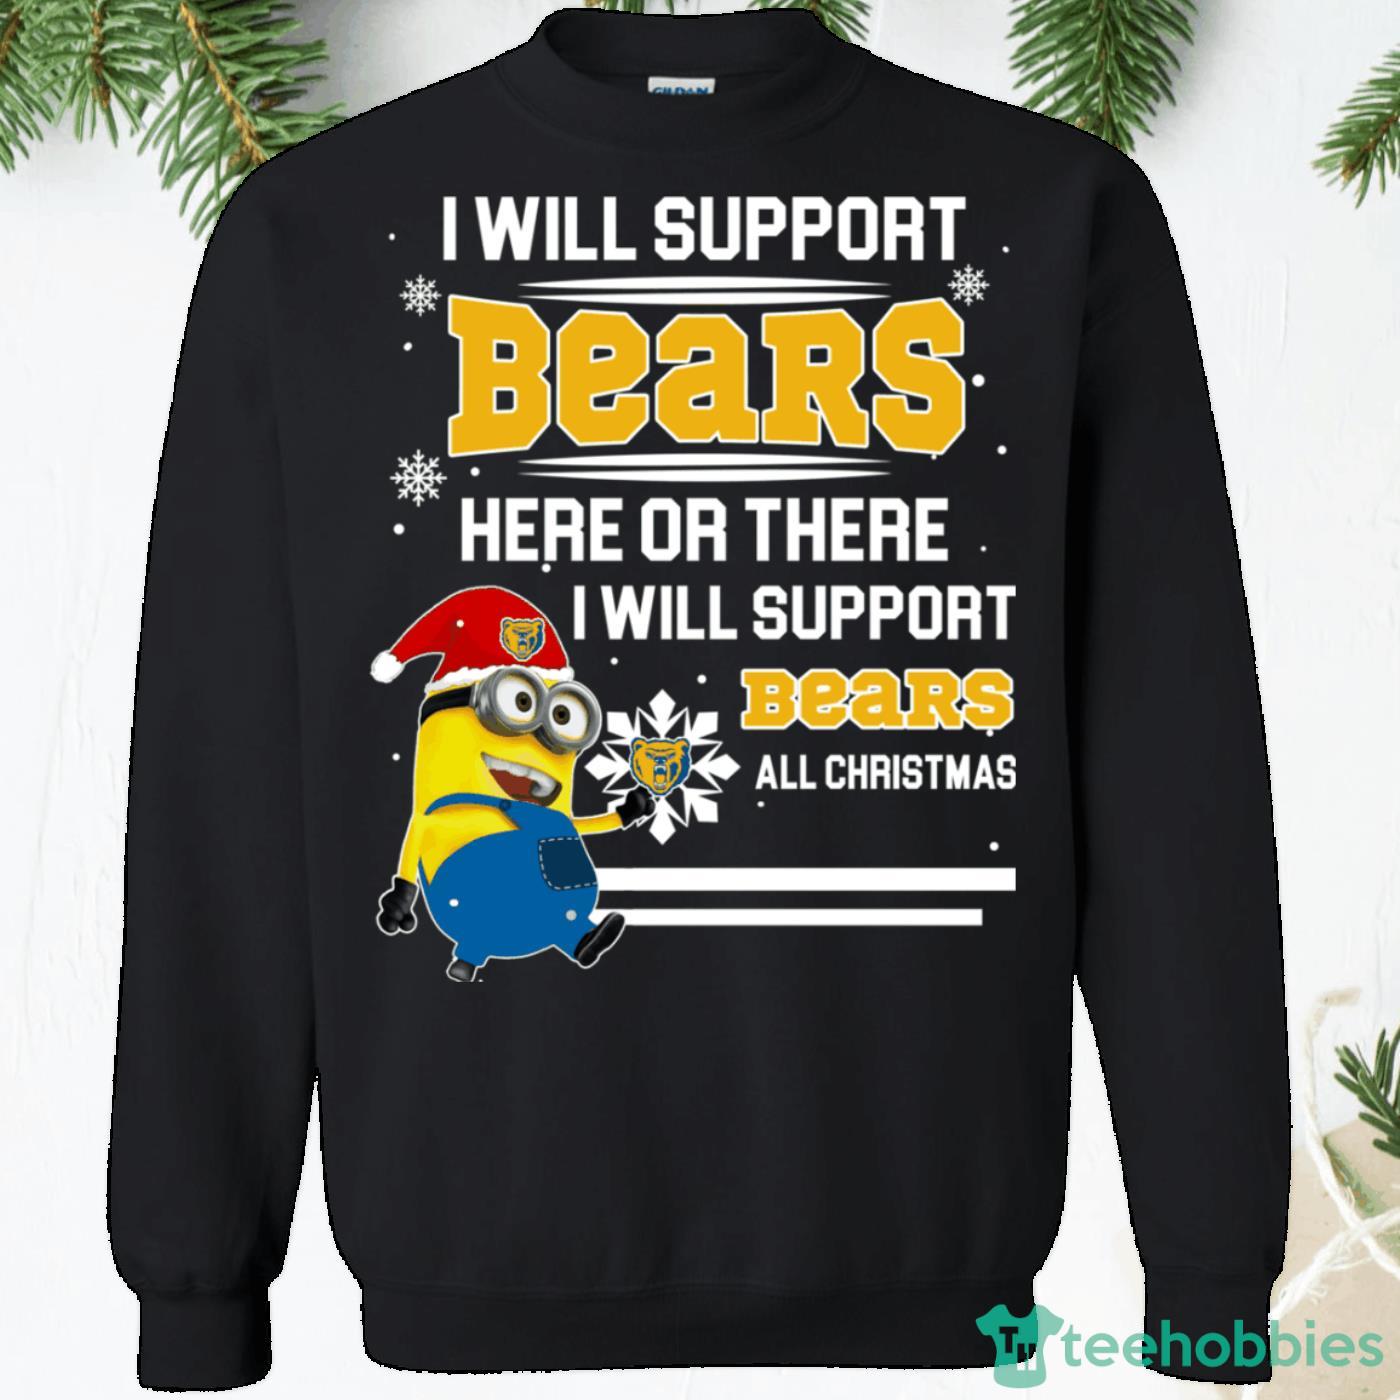 Northern Colorado Bears Minion Christmas Sweatshirt Product Photo 1